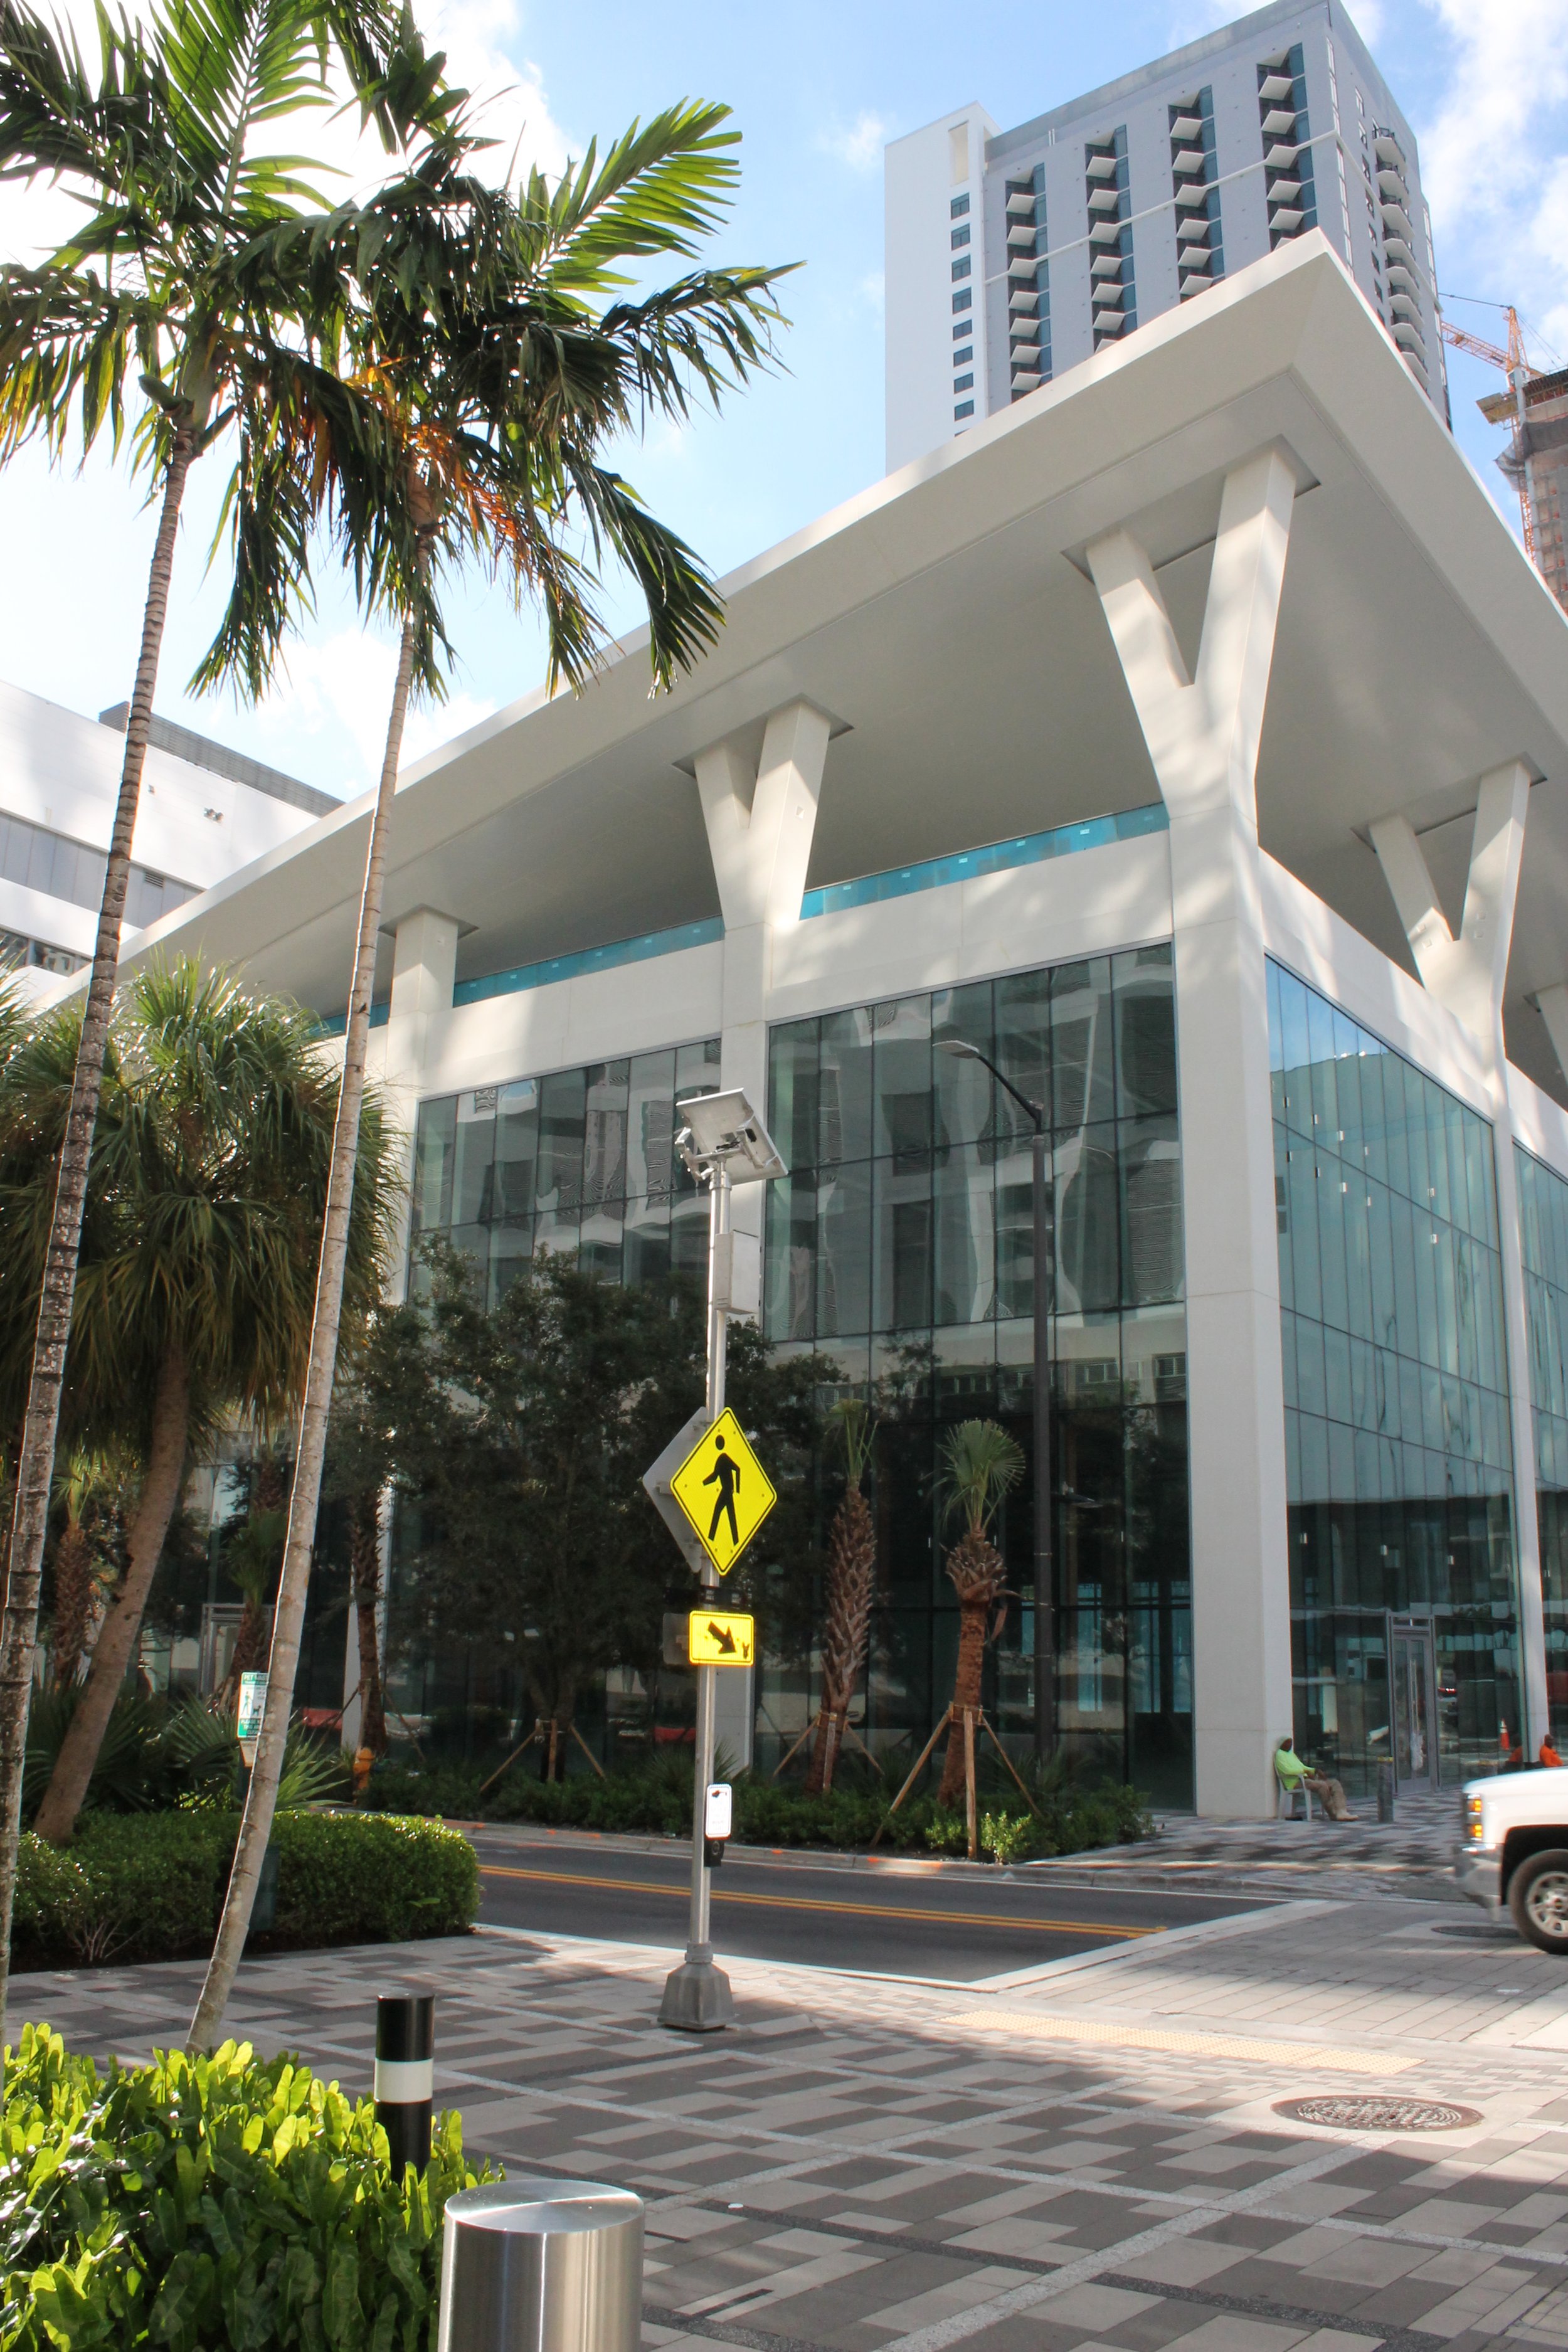 Opening at Miami Worldcenter: El Vecino